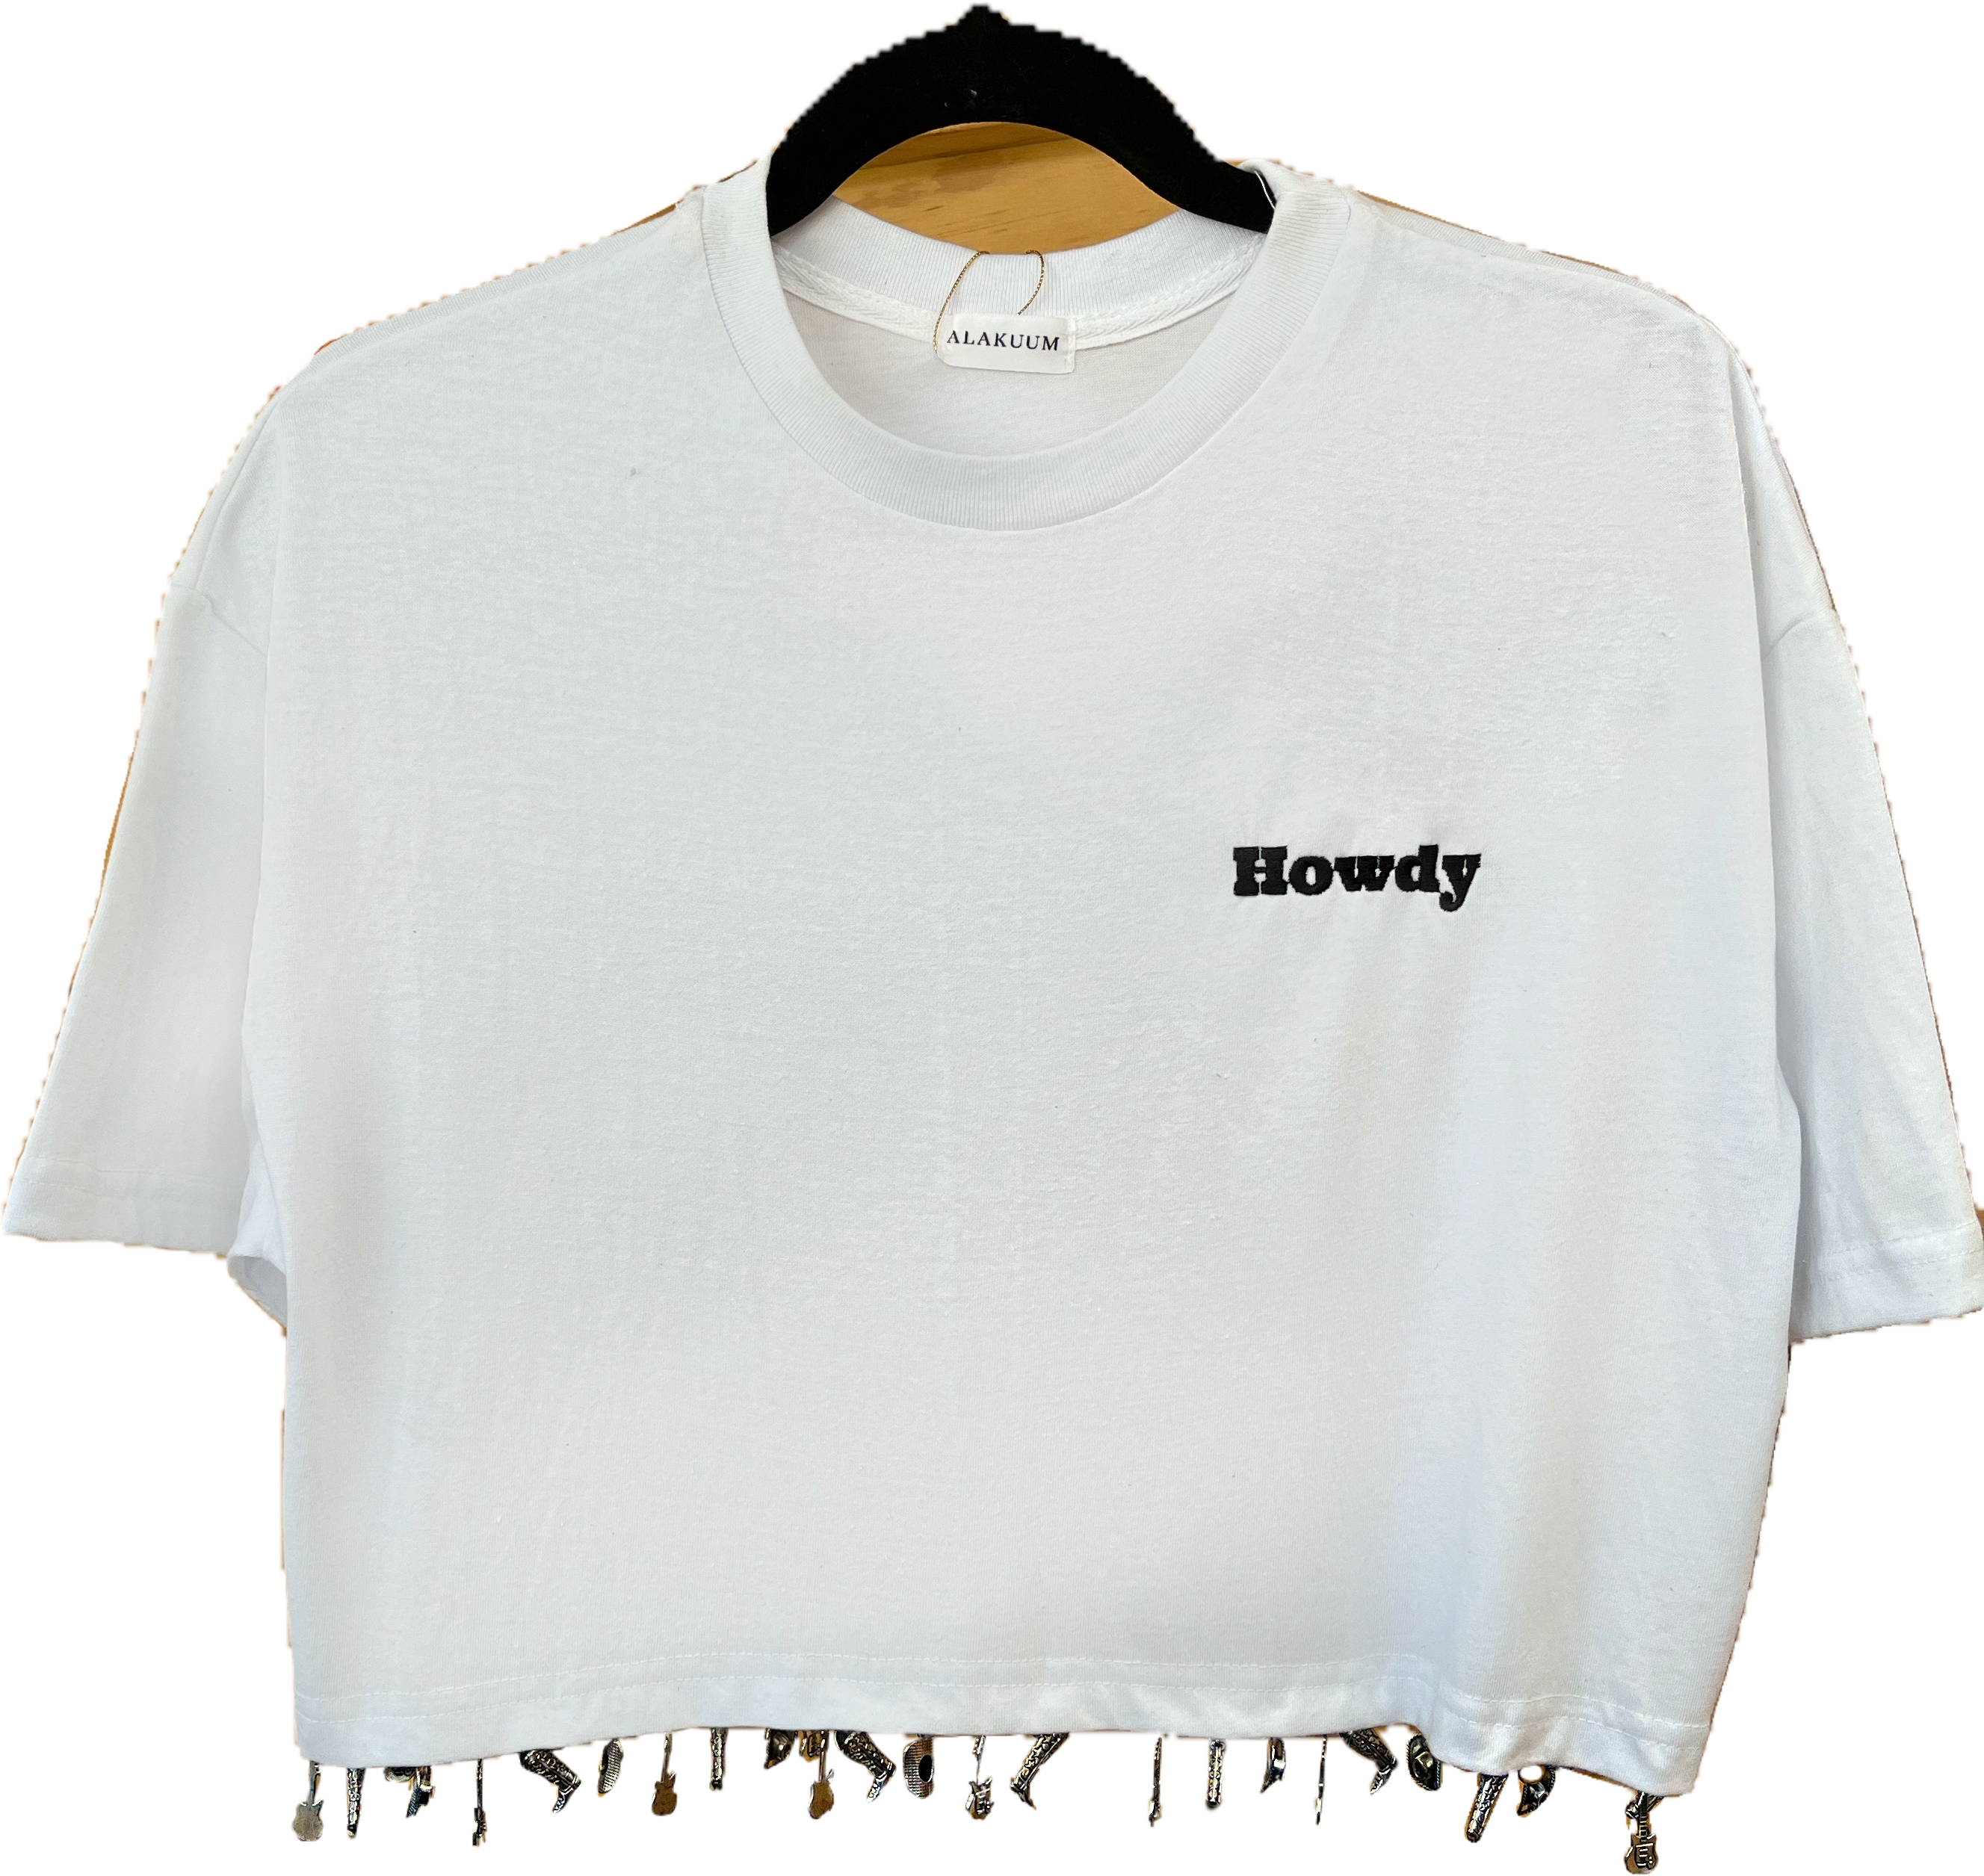 Howdy t-shirt